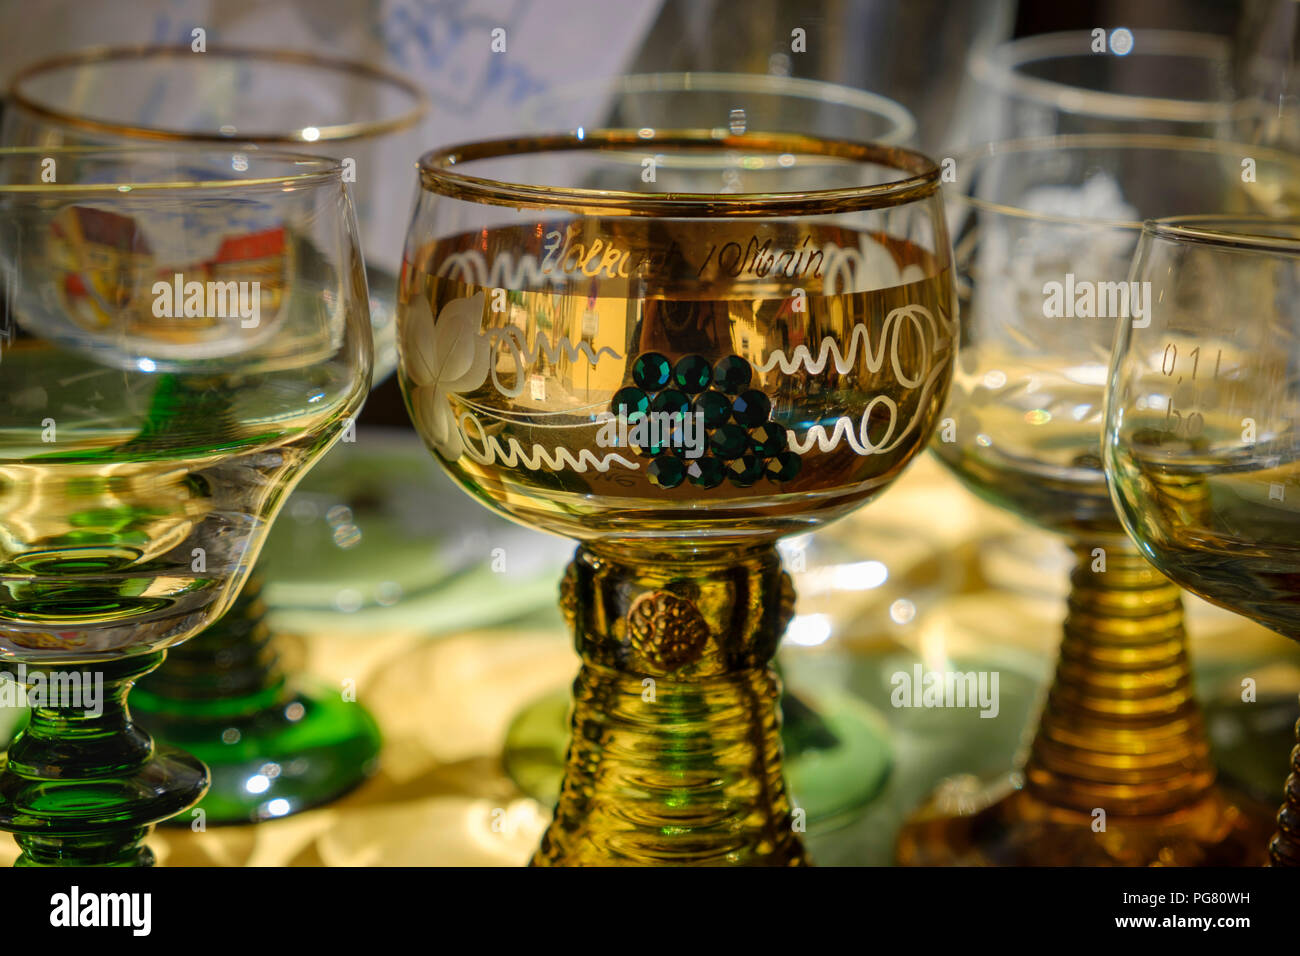 Germany, Bavaria, Franconia, Franconian wine glasses in a shop Stock Photo